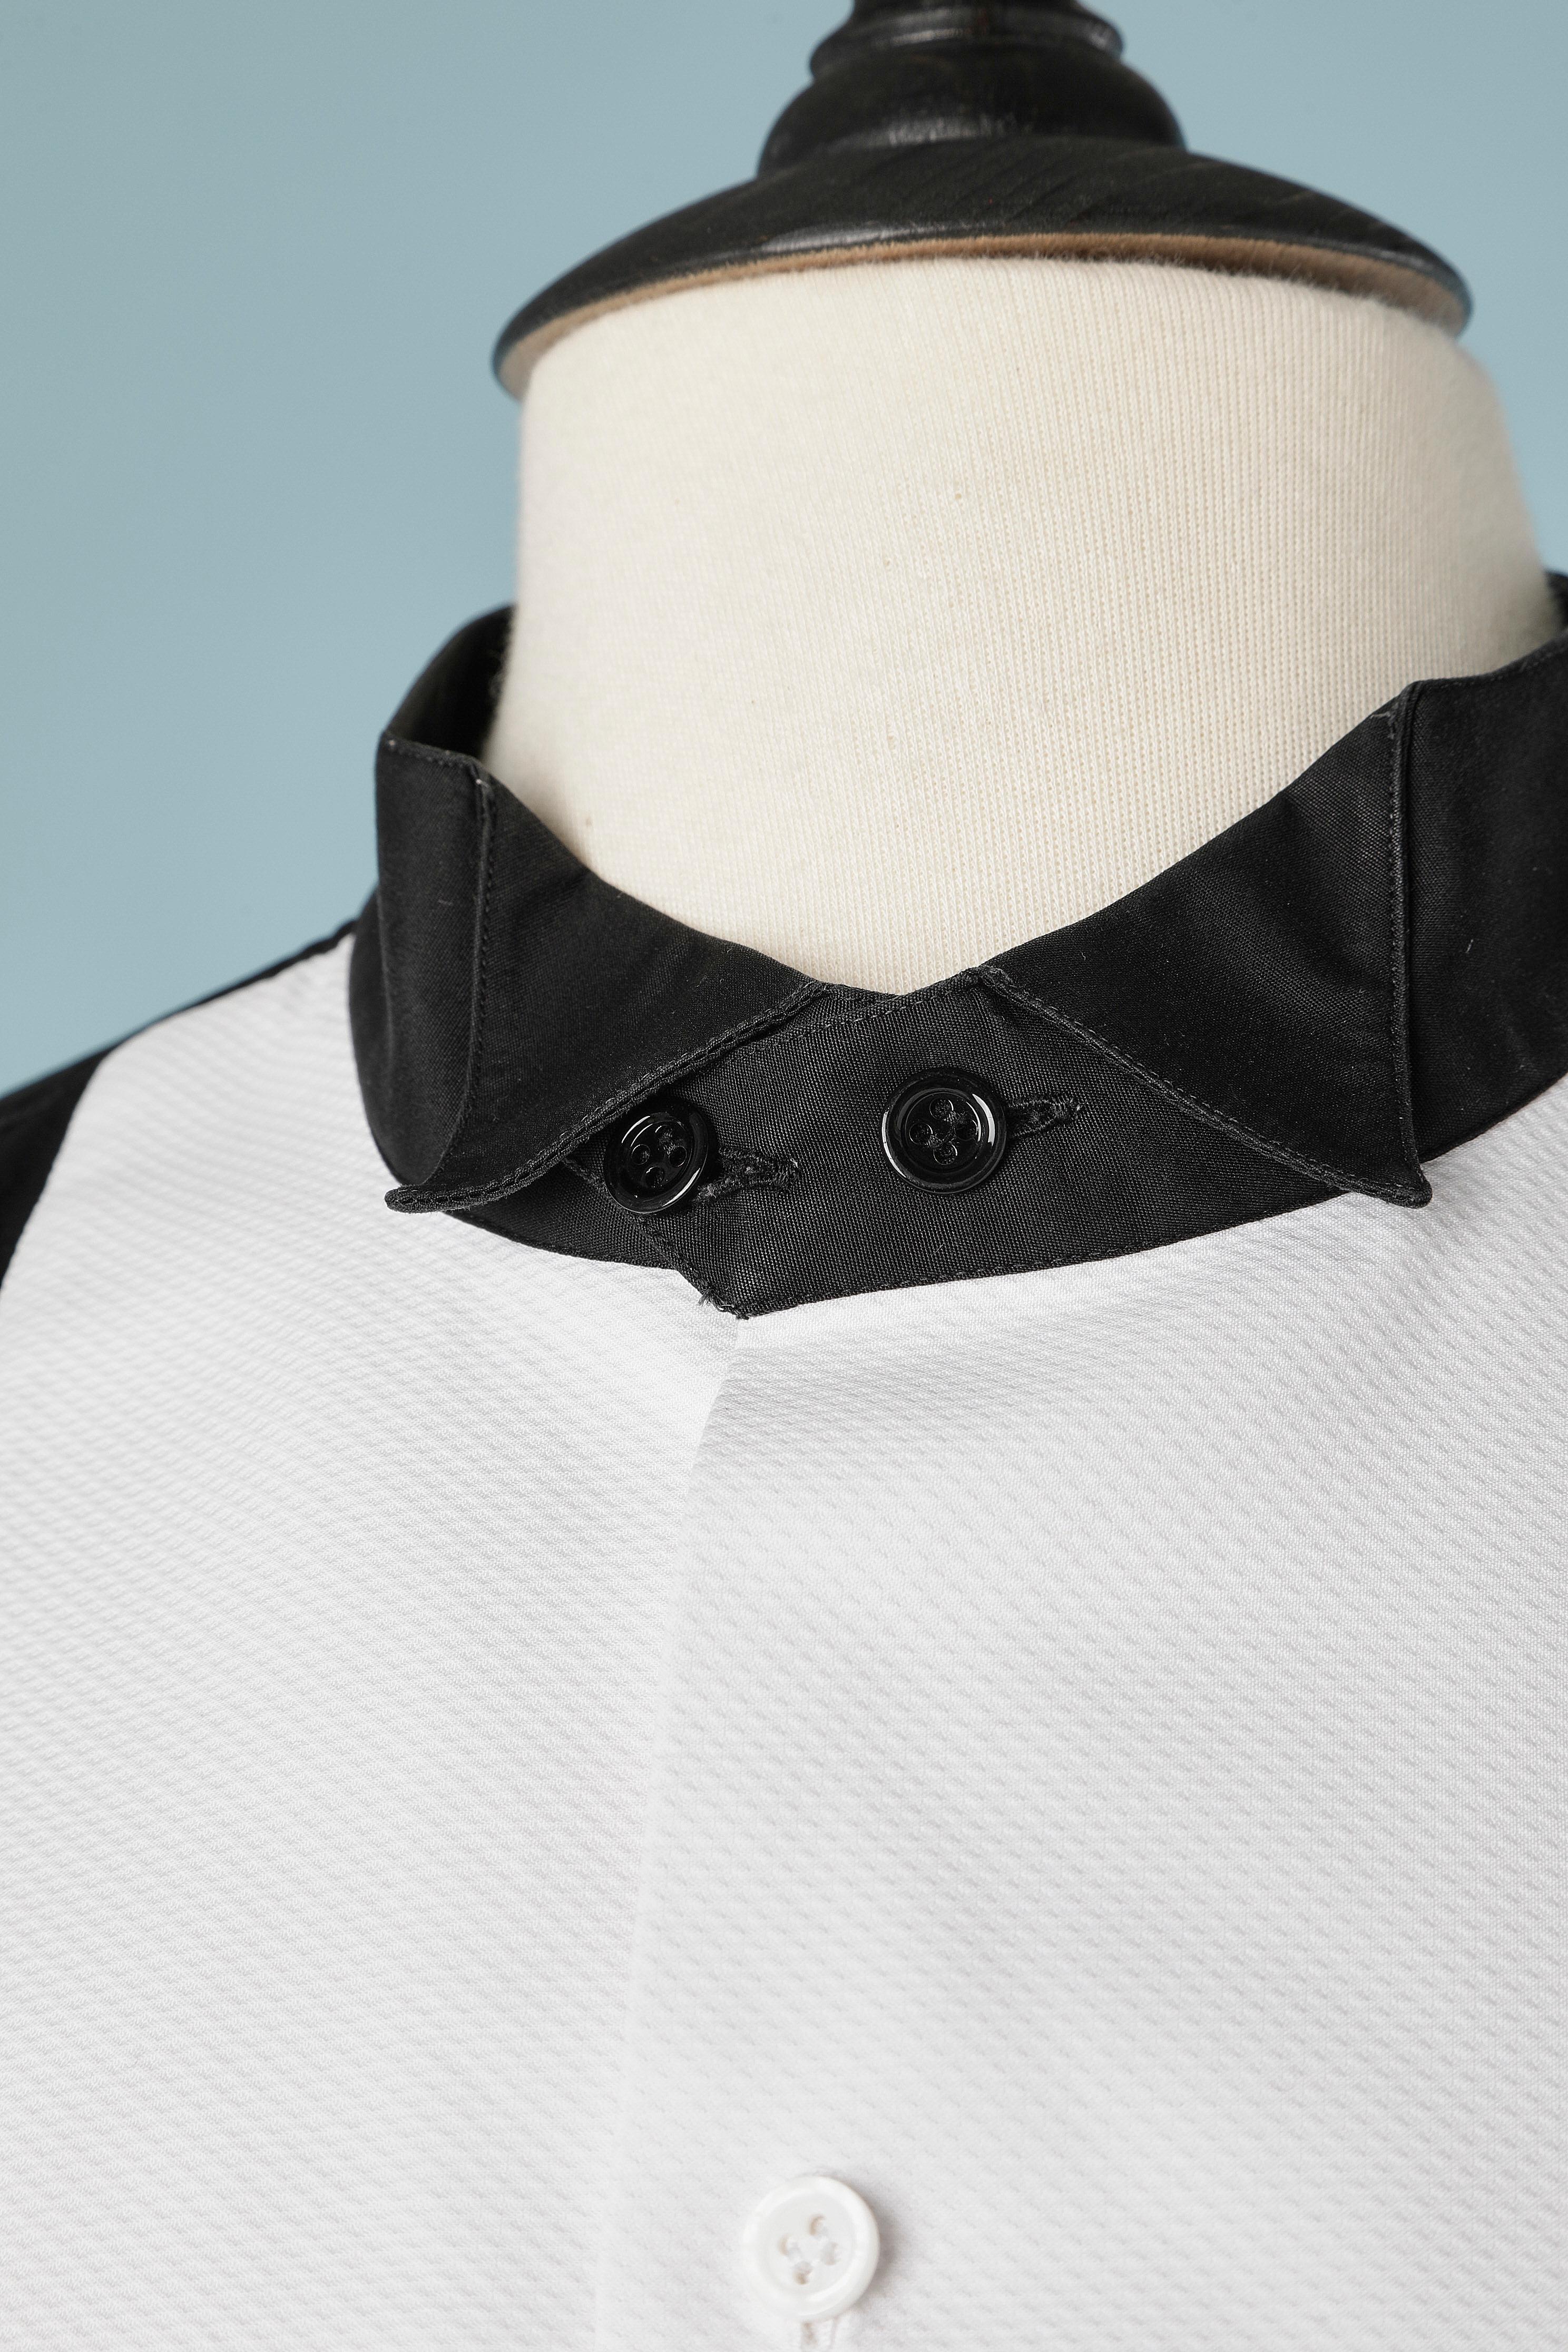 Black and white Tuxedo shirt.
SIZE 40 / L 